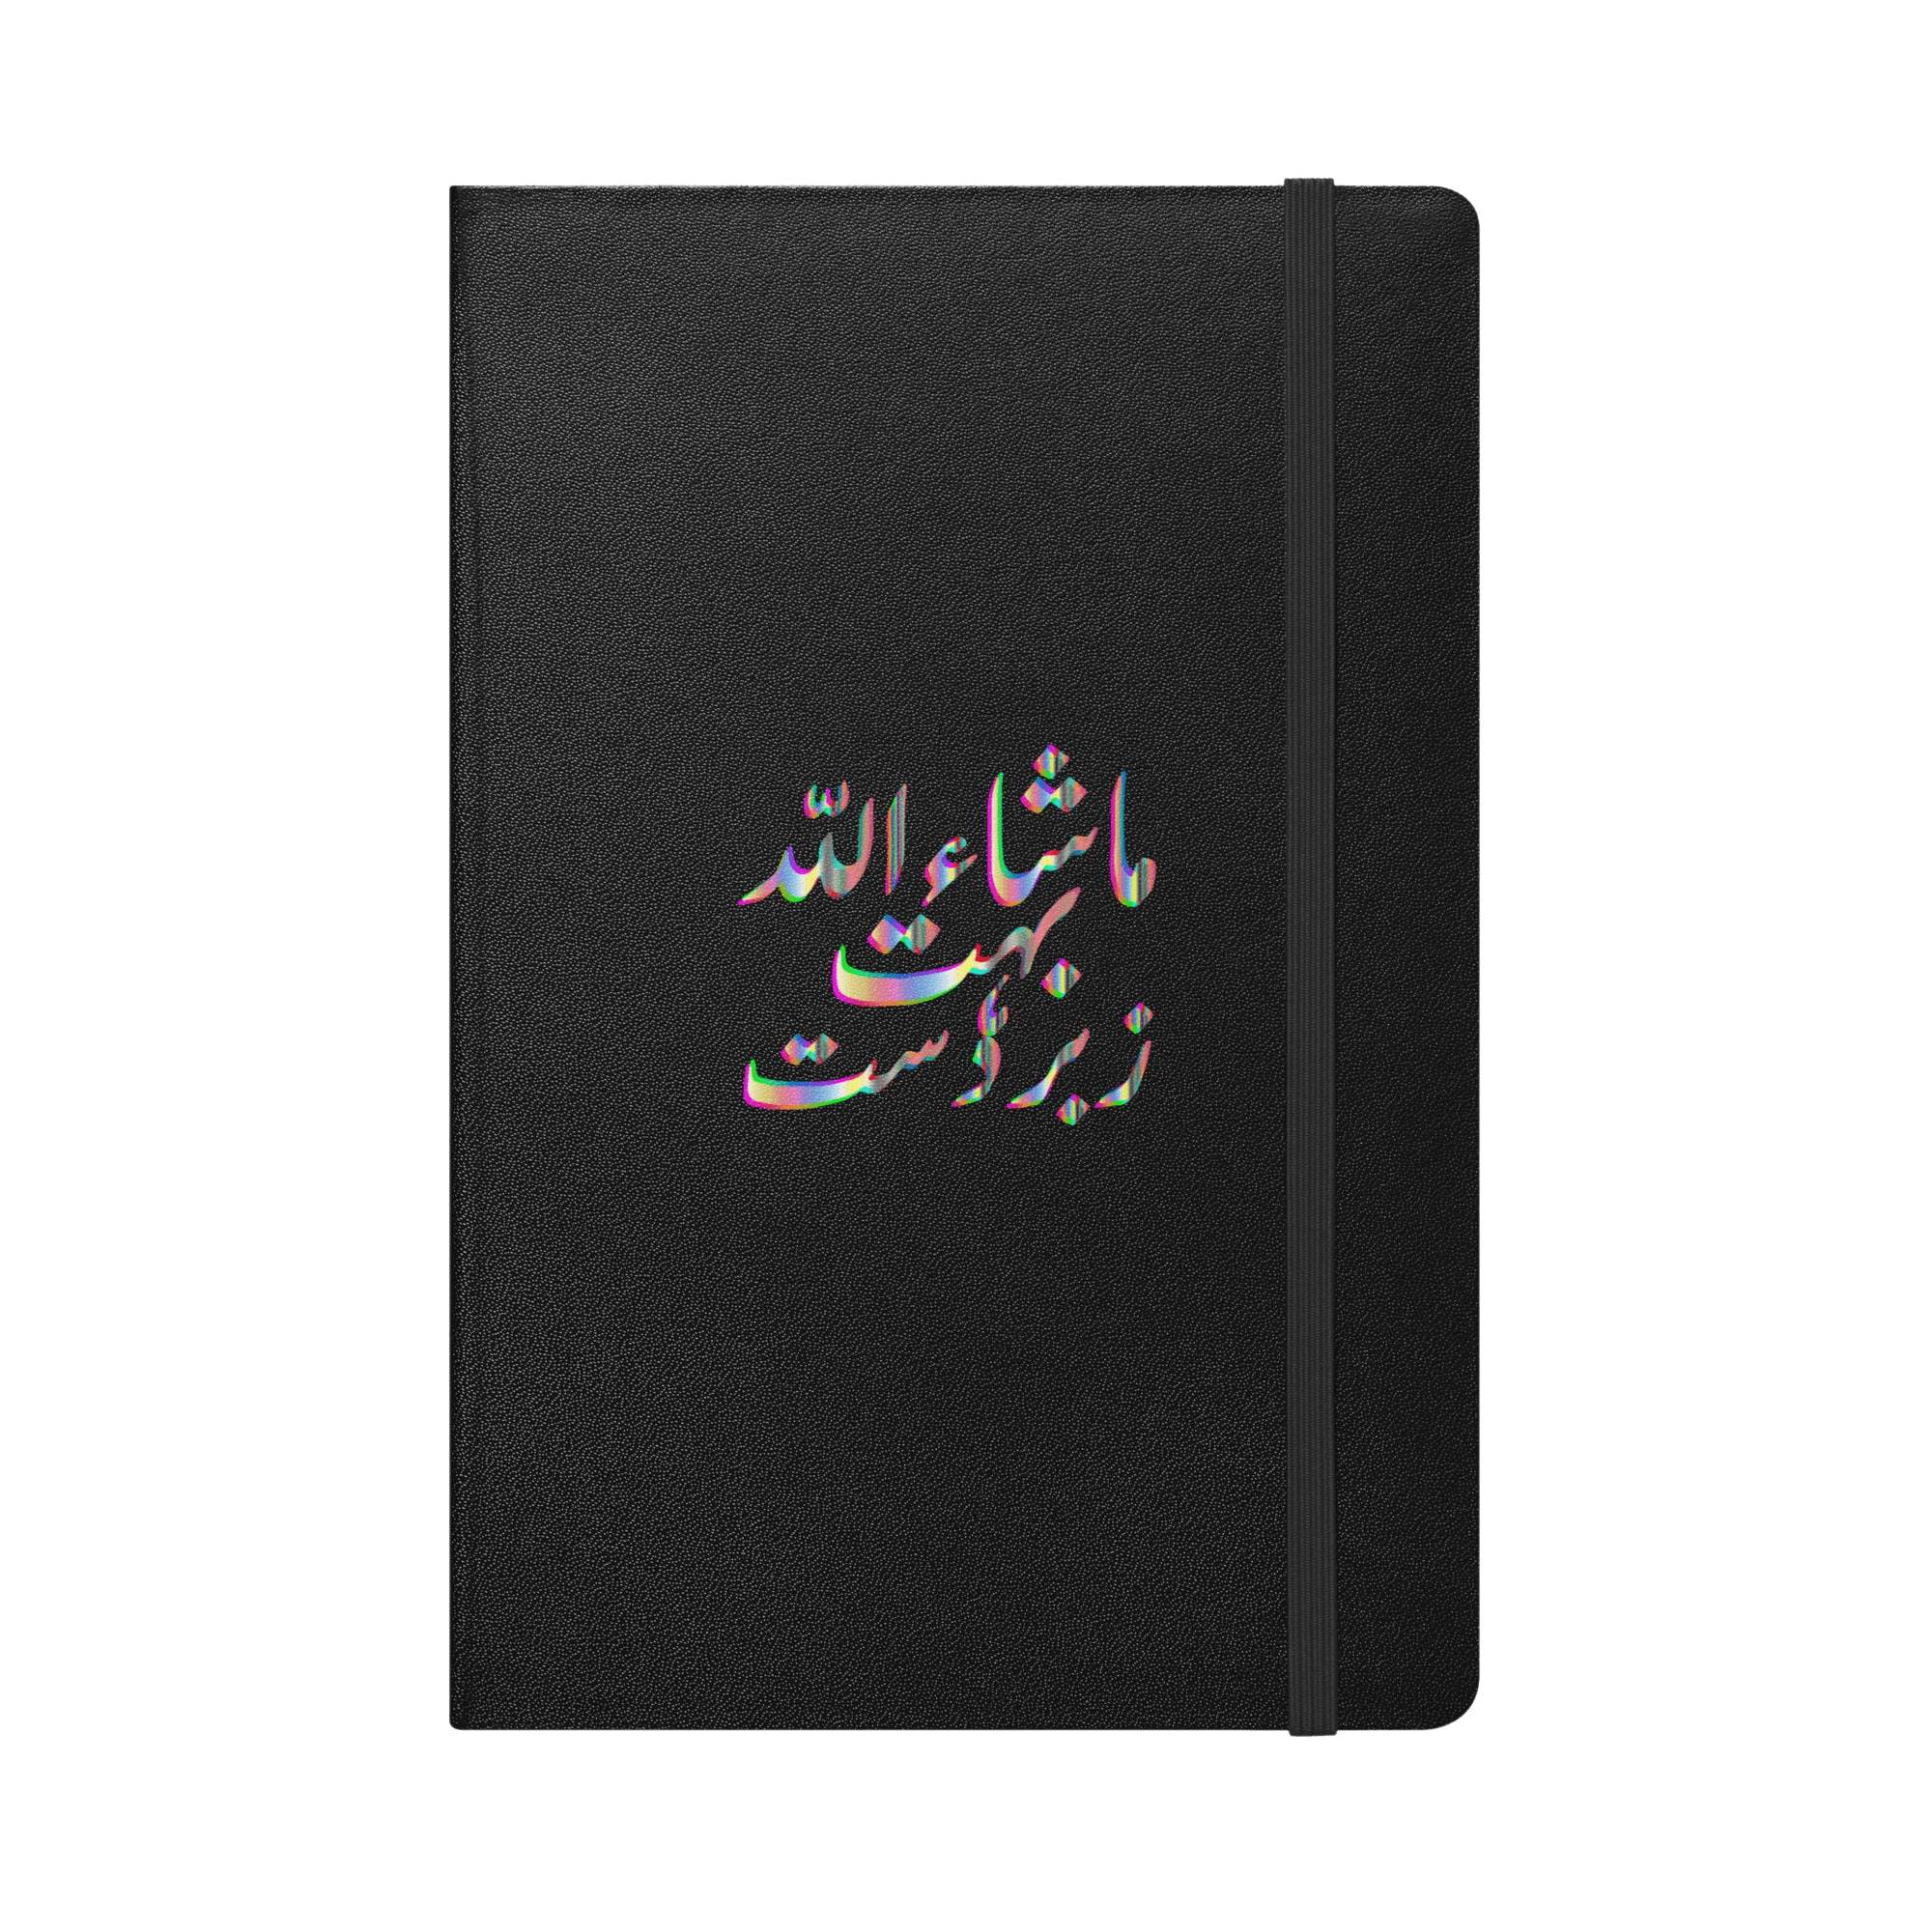 Mashallah Bohot Zabardast Hardcover Notebook KHAJISTAN